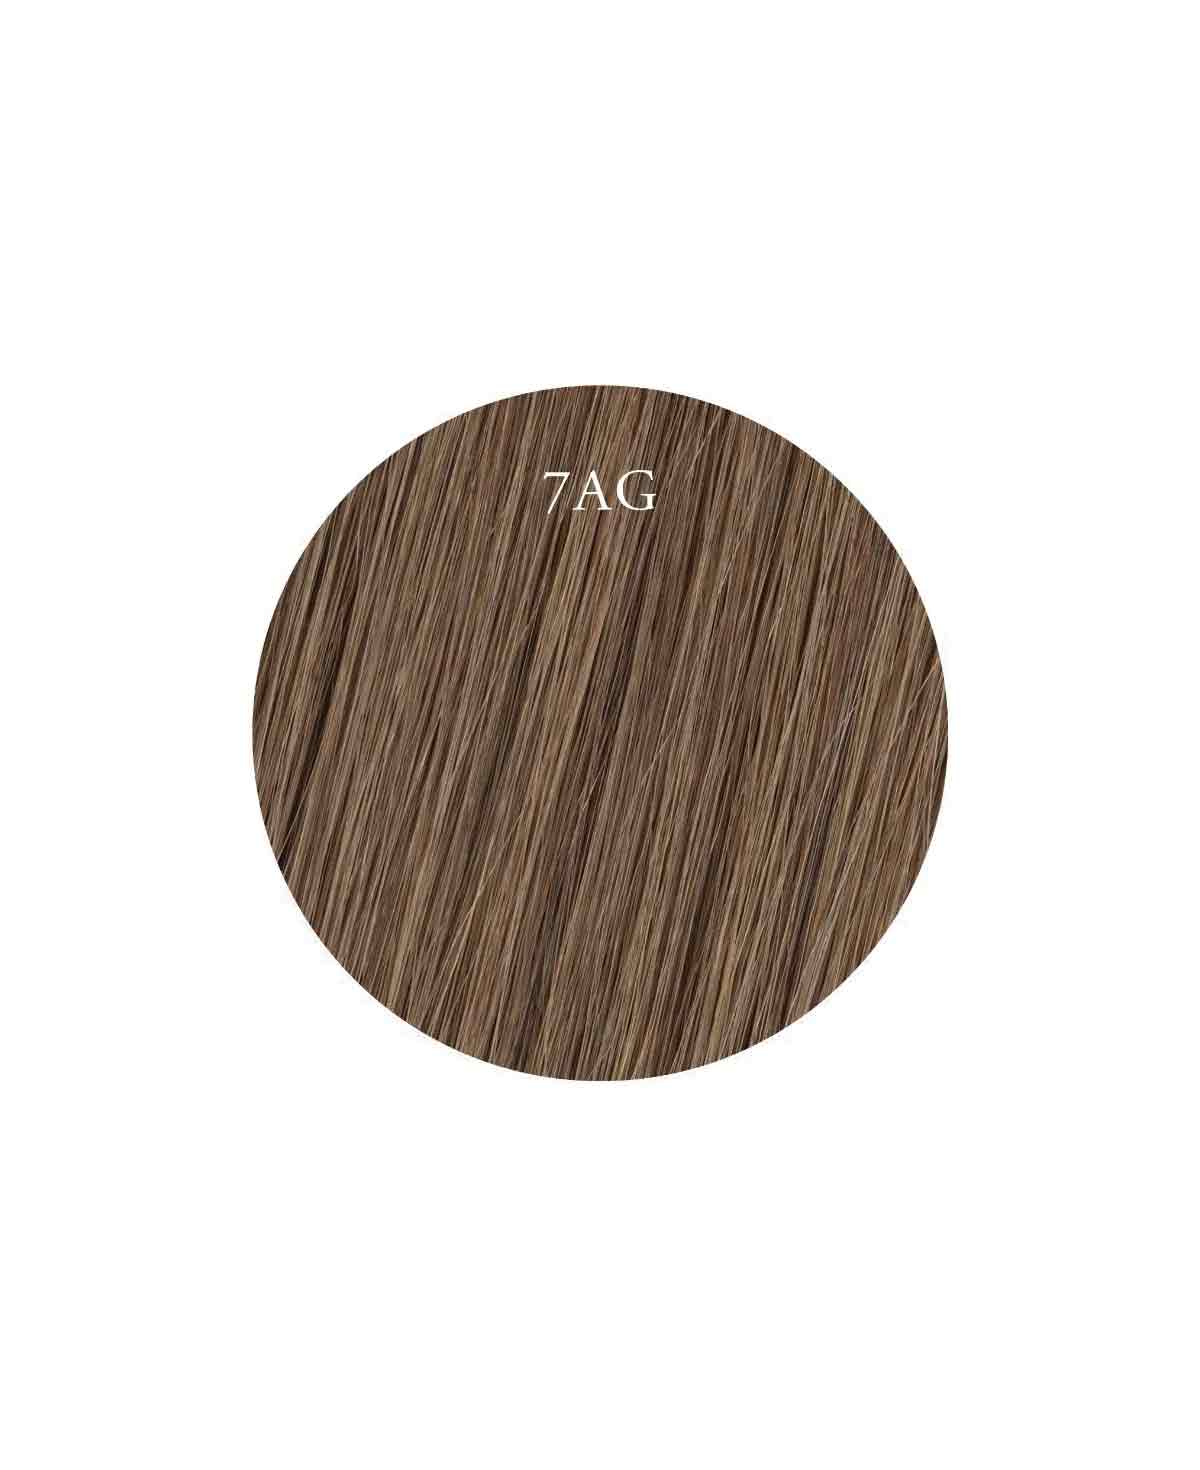 Showpony45-50cm (20") 7 Piece Clip In Hair Extension -7AG Cinnamon 